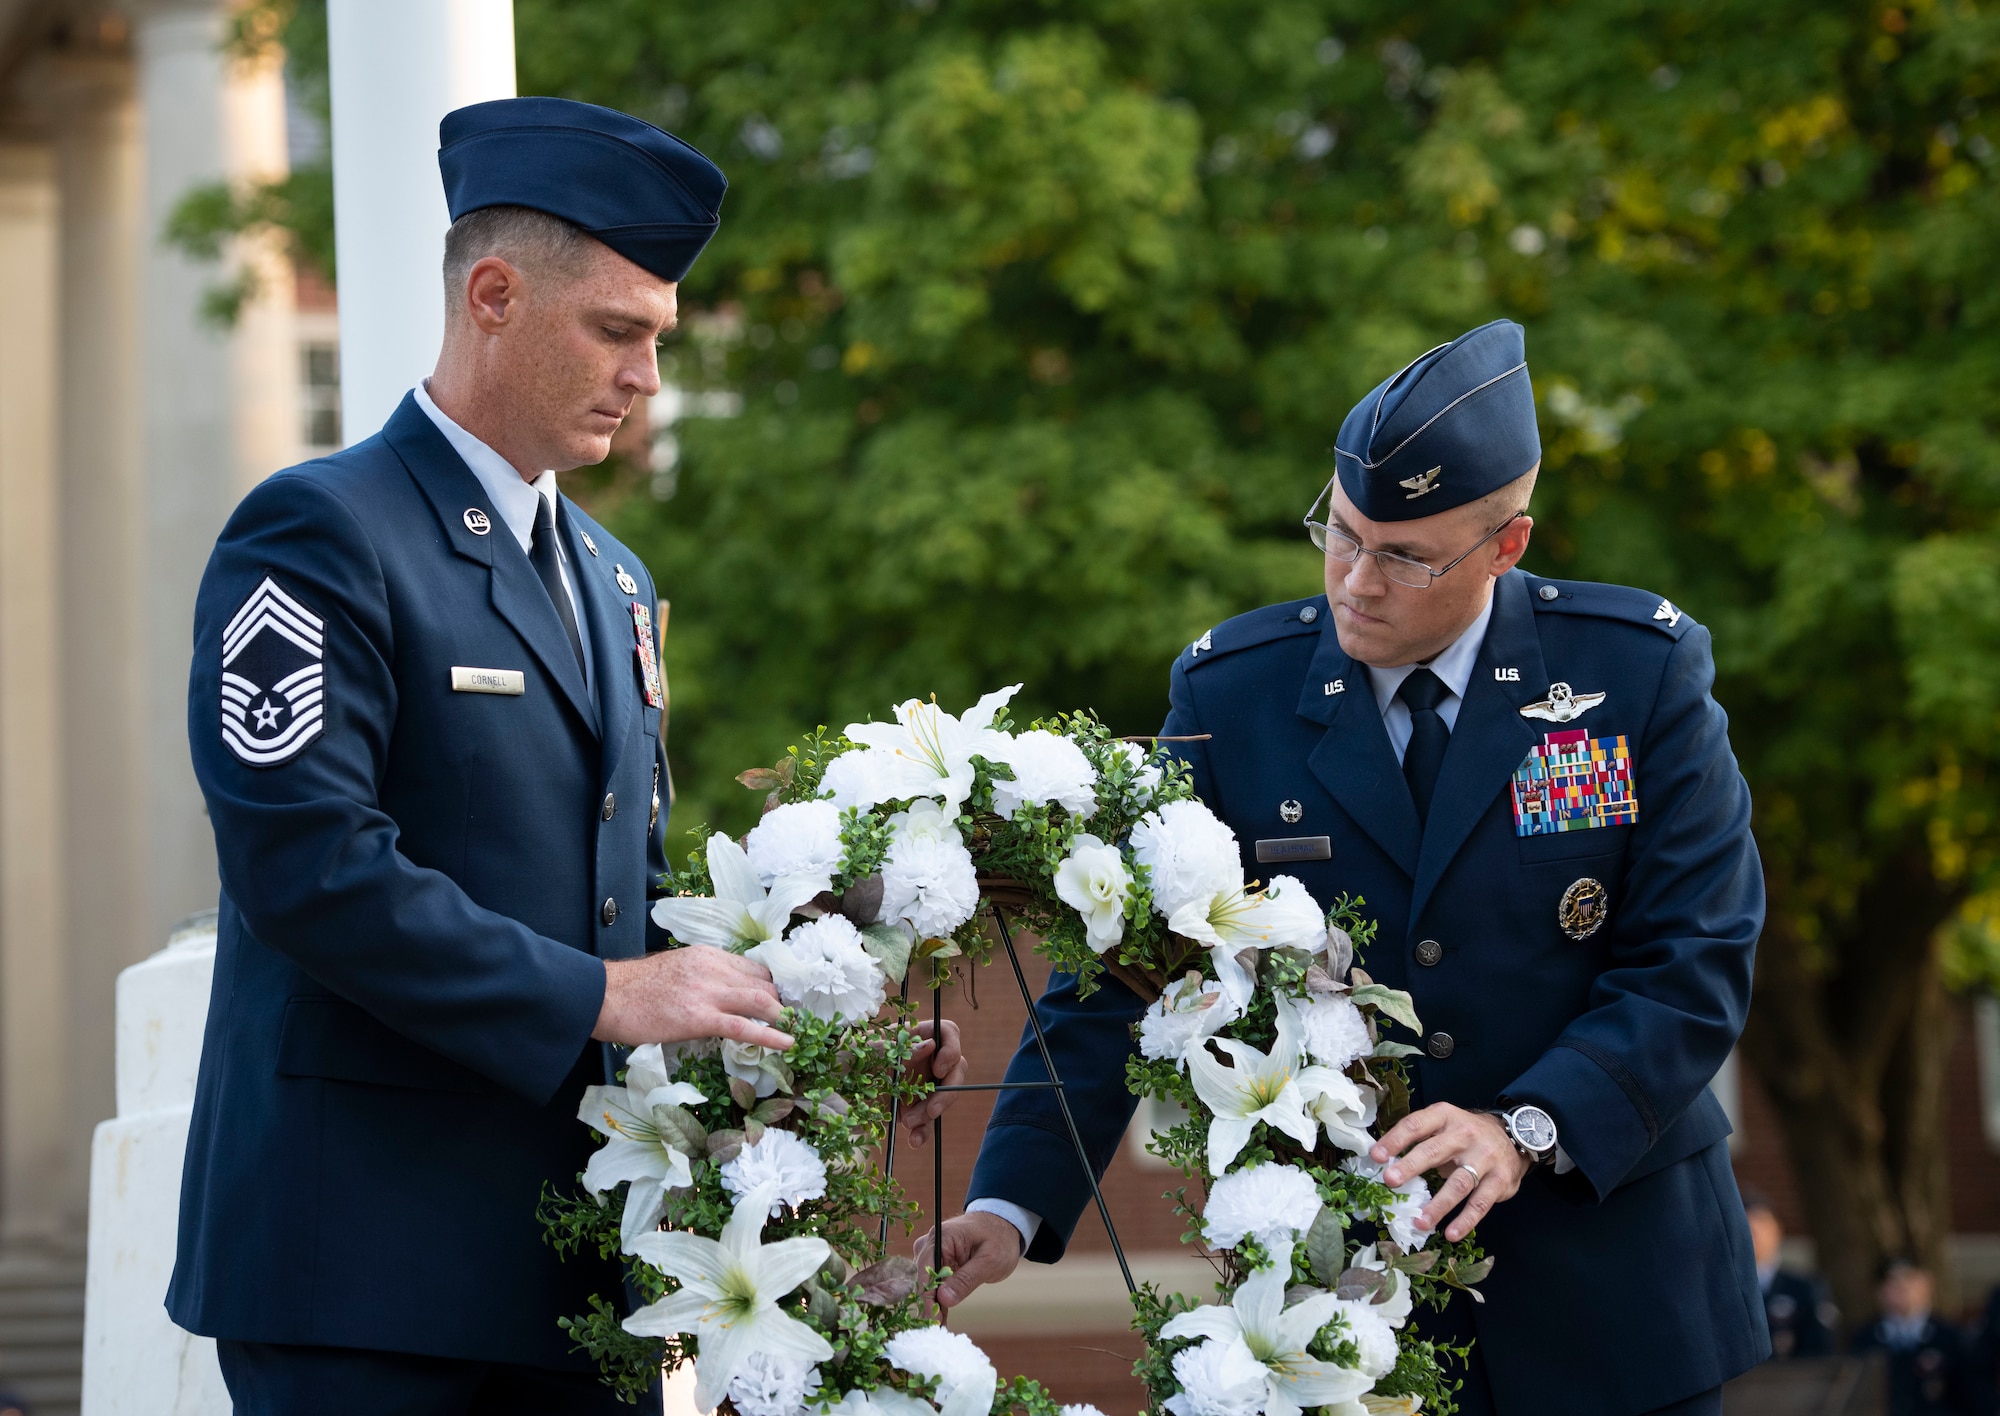 Airmen carry wreath